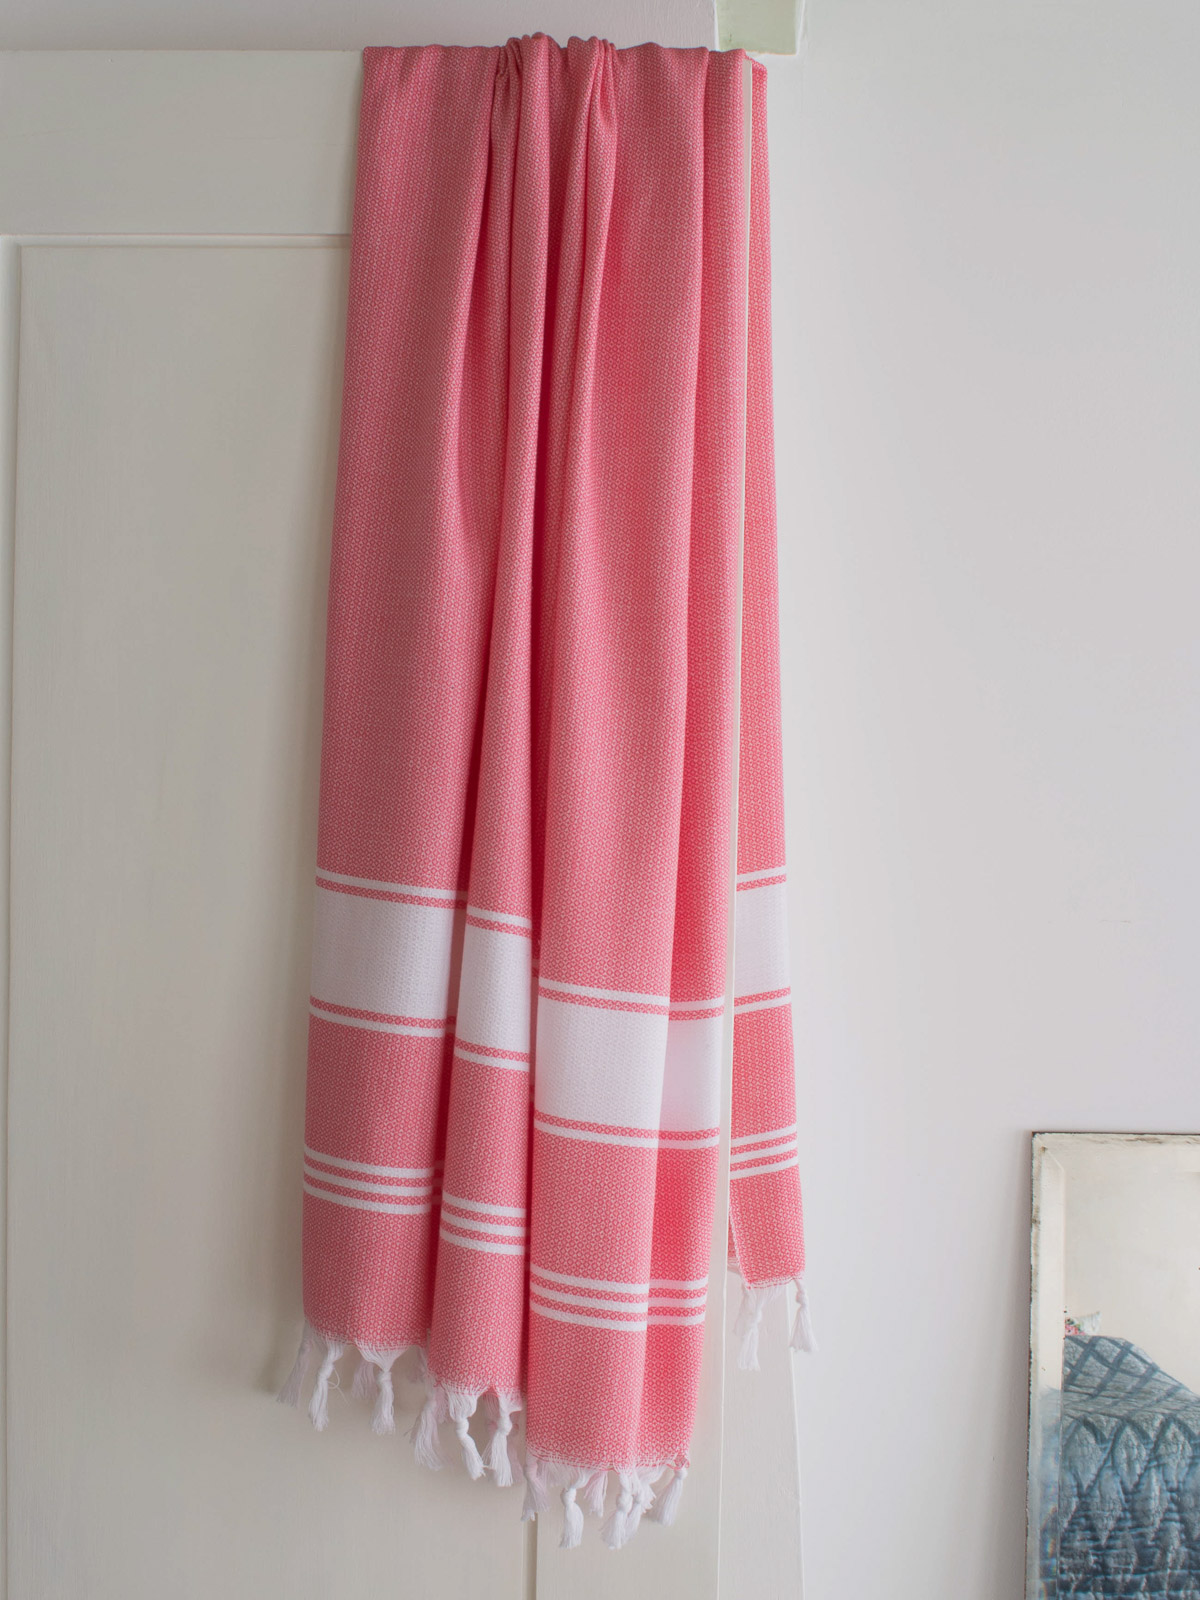 hammam towel candy pink/white 